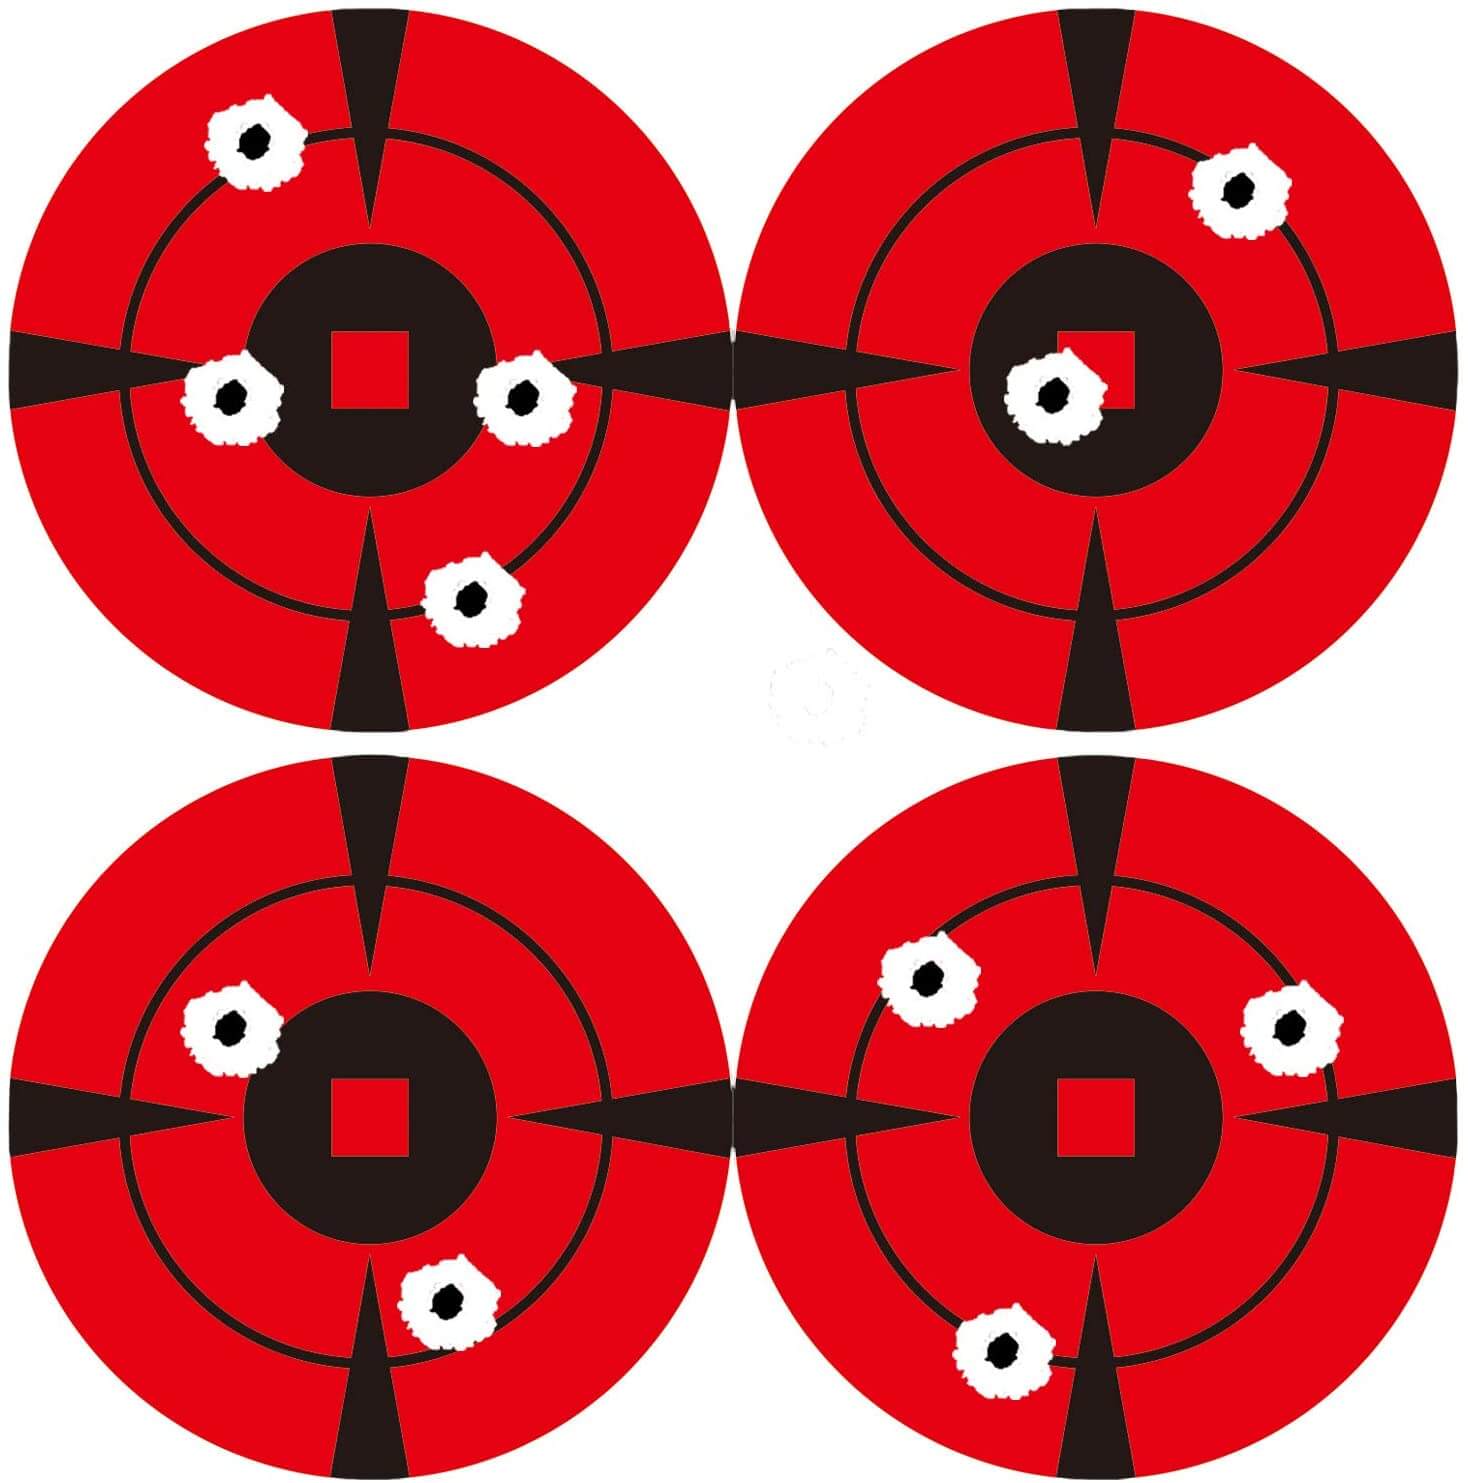 Self-Adhesive Target Stickers